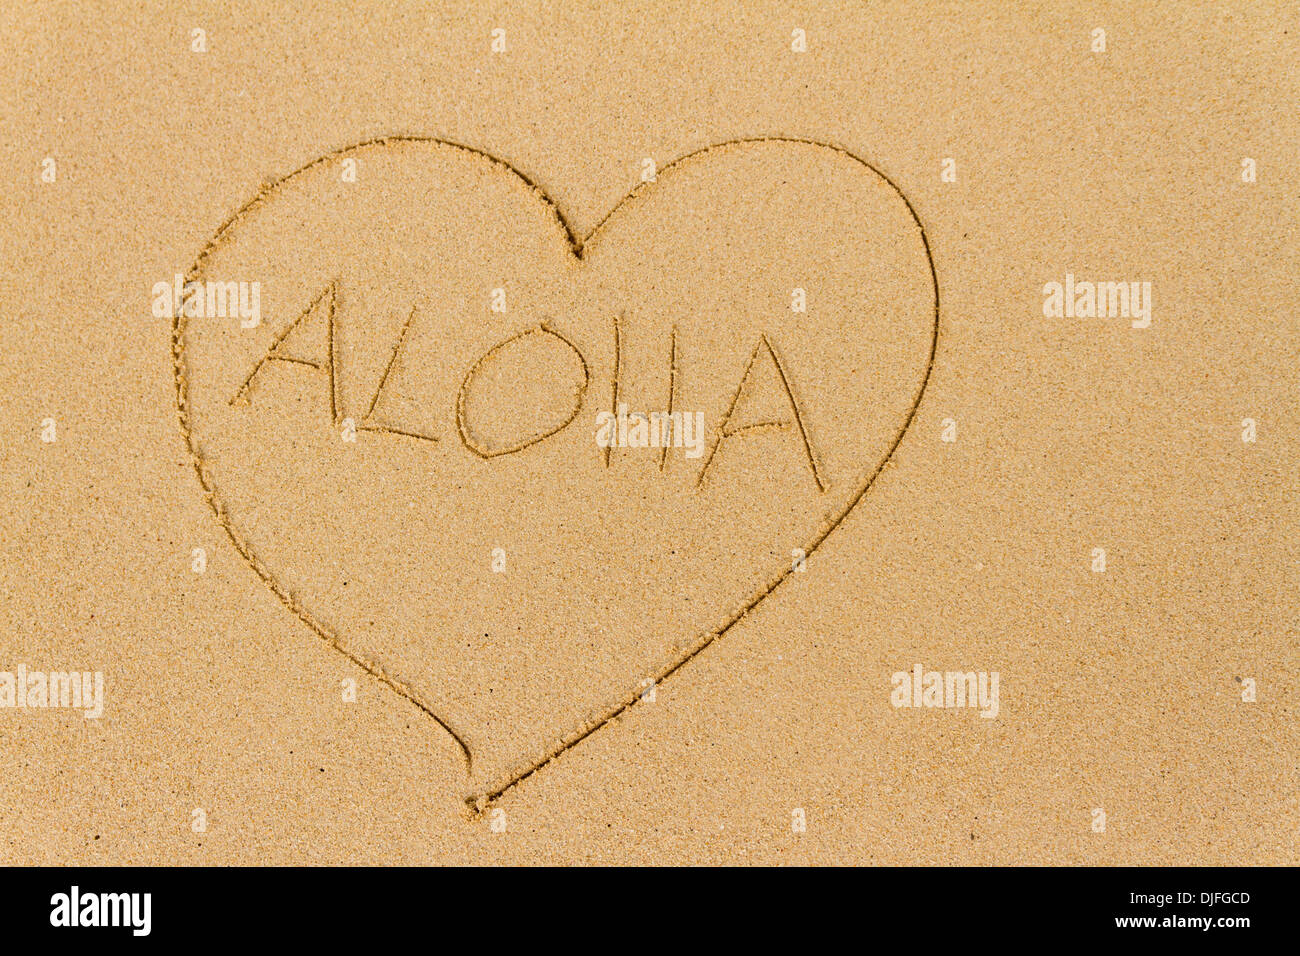 A Heart Drawn In The Sand With The Word Aloha; Honolulu, Oahu, Hawaii, United States Of America Stock Photo